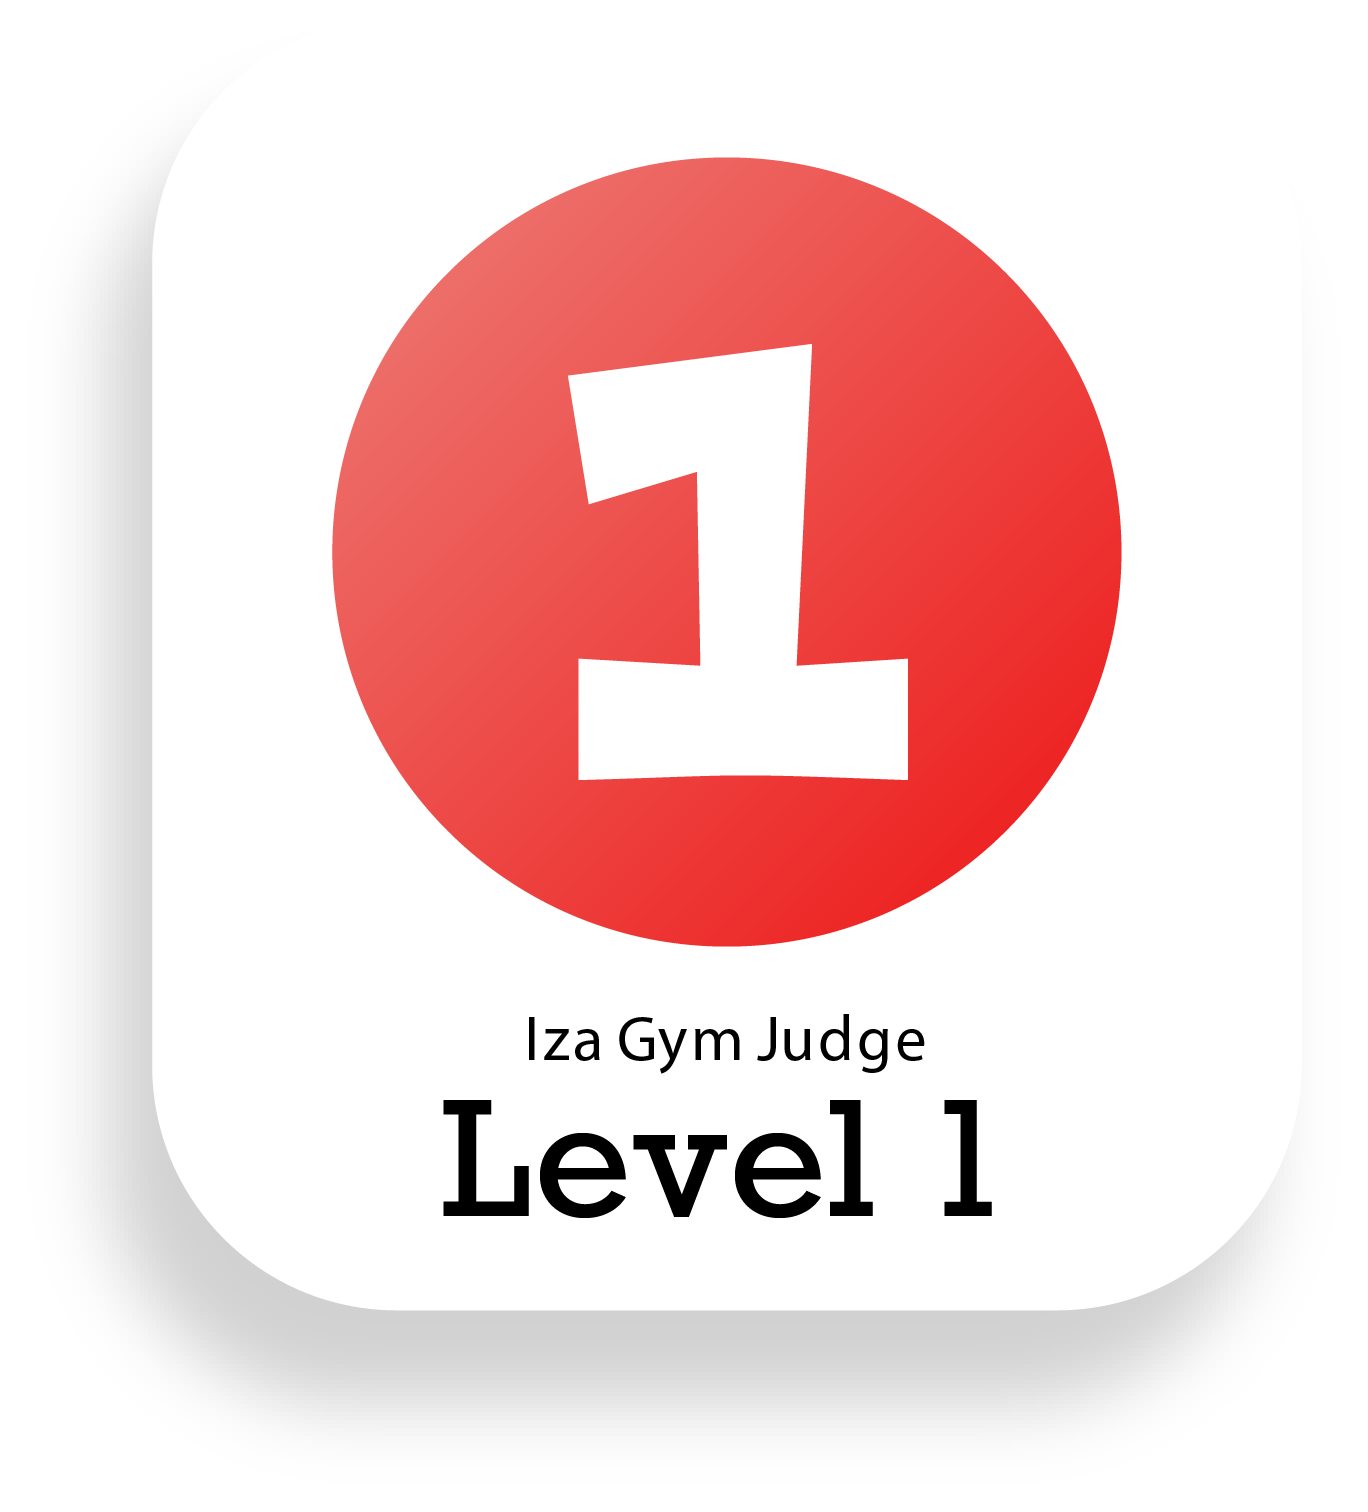 DP Gymnastics Level 8 — lzaGymJudge